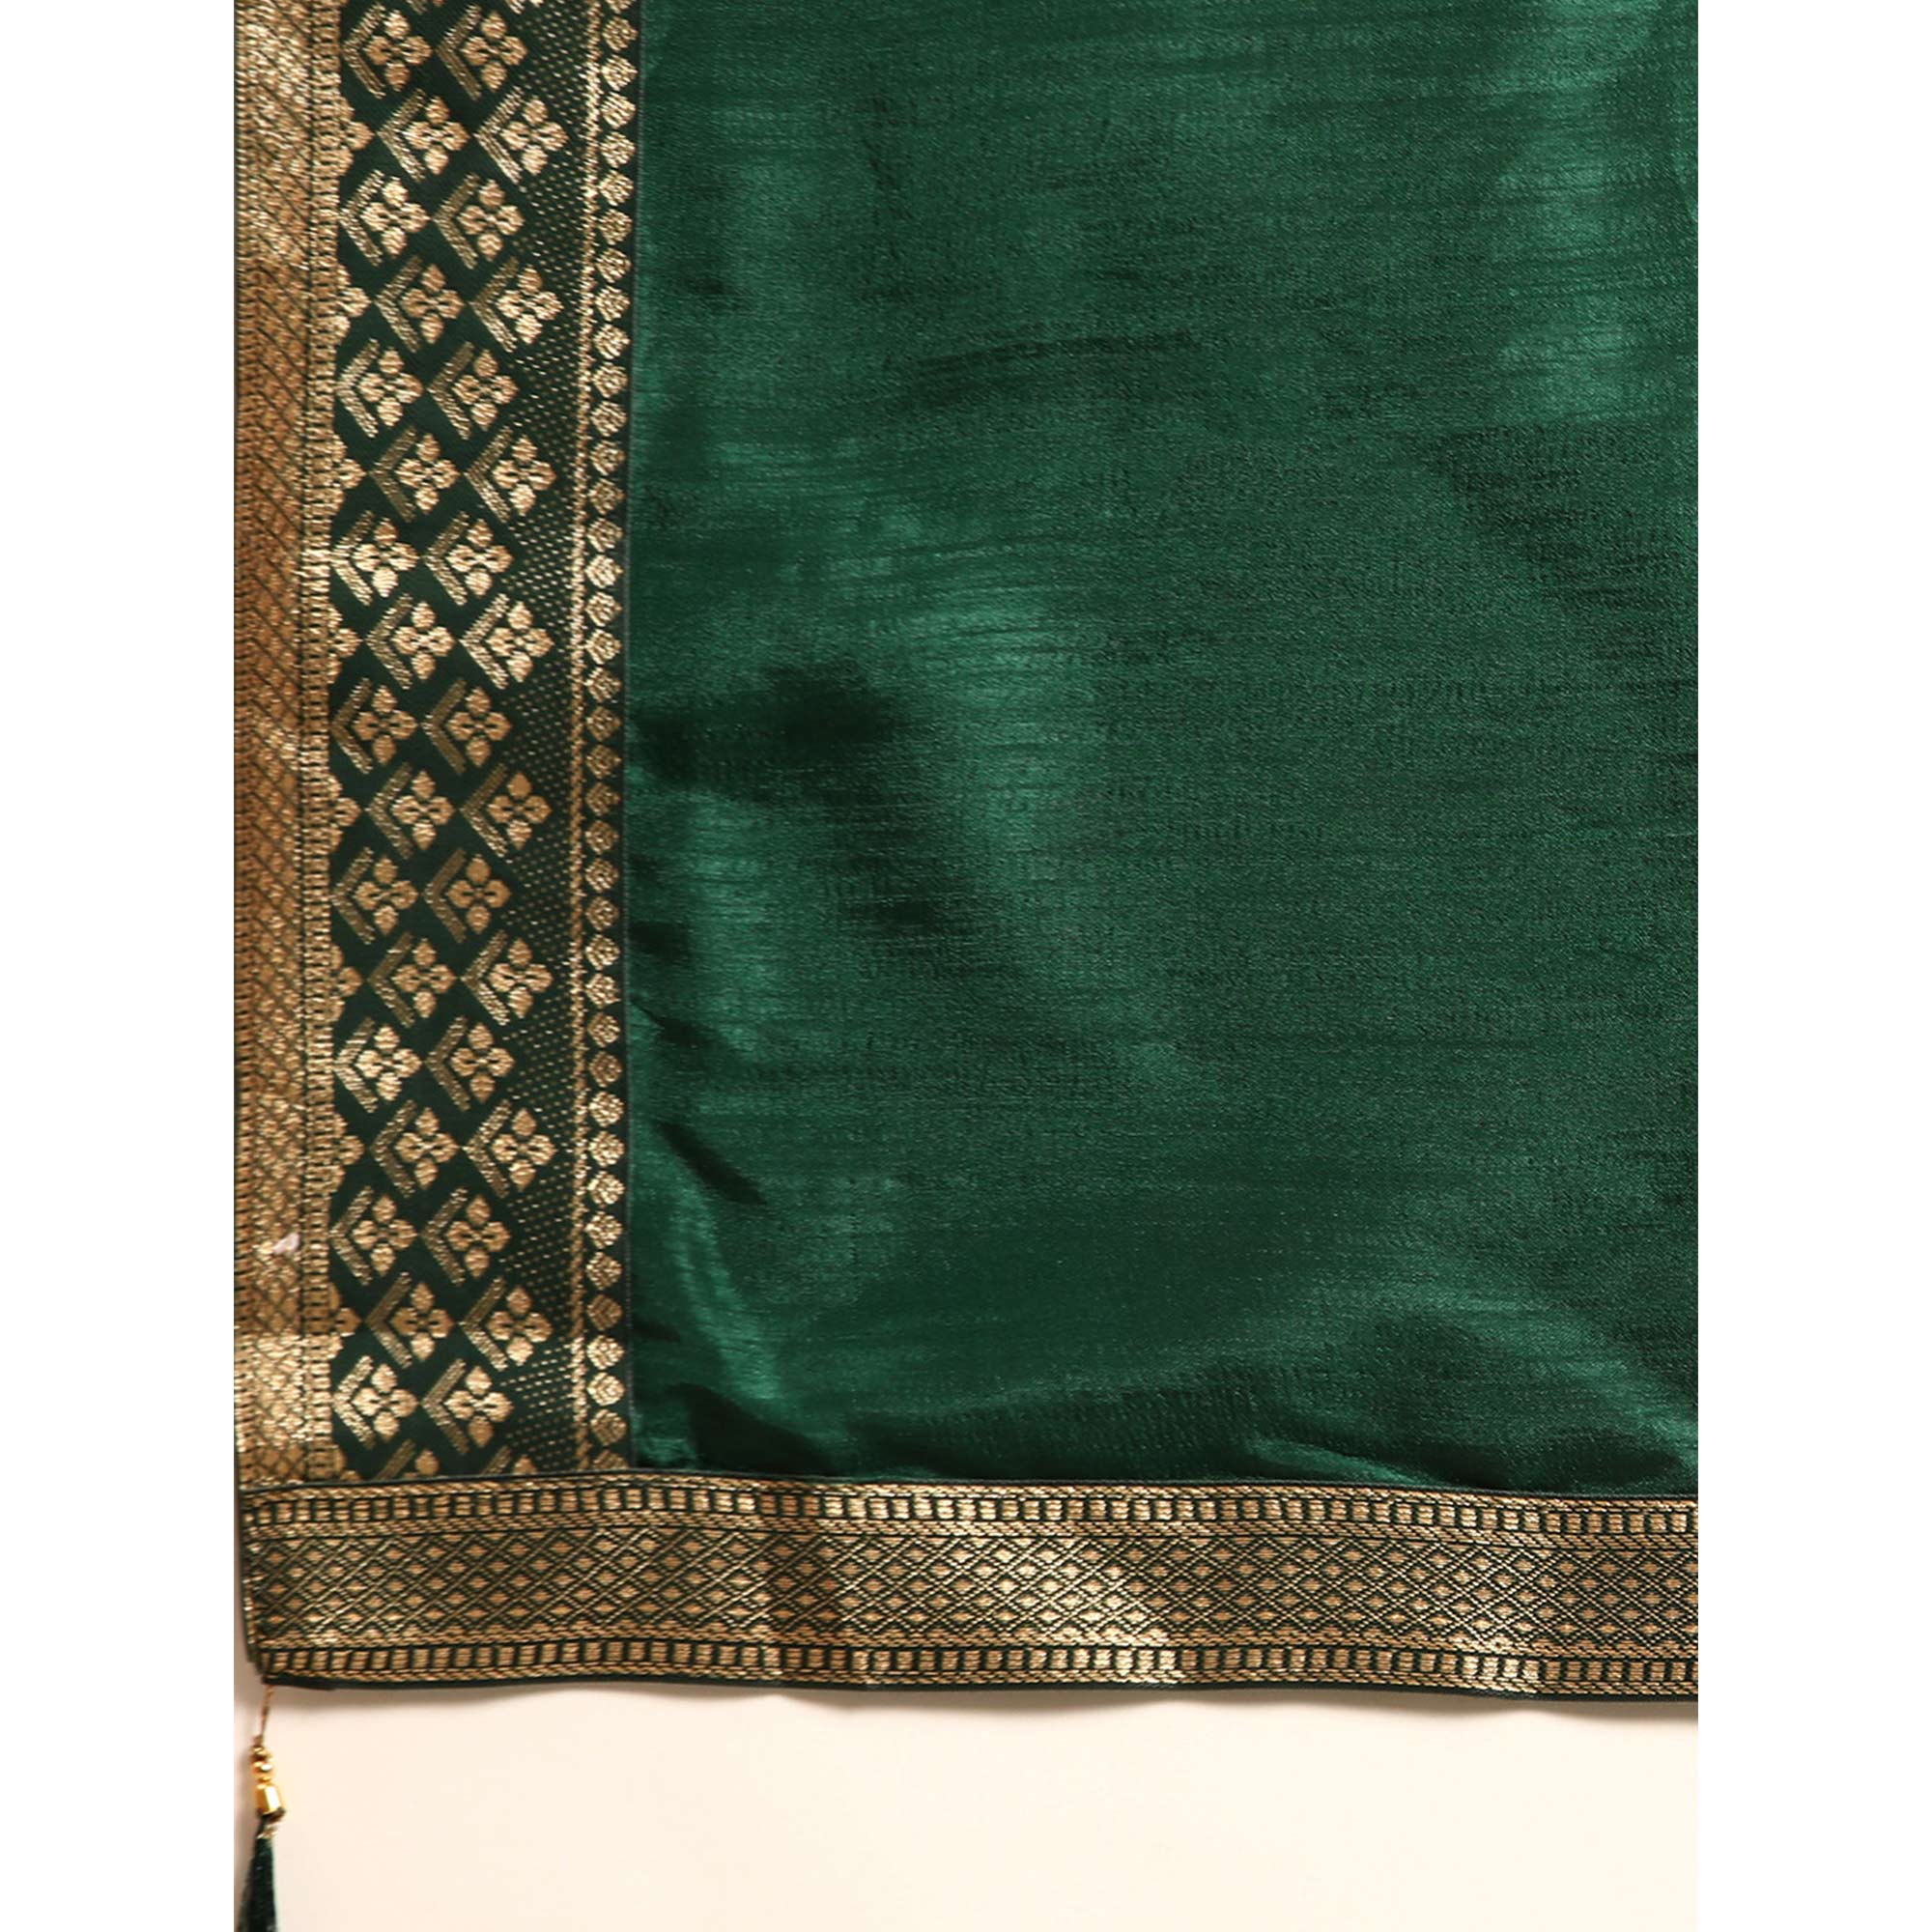 Green Solid Vichitra Silk Saree With Zari Border